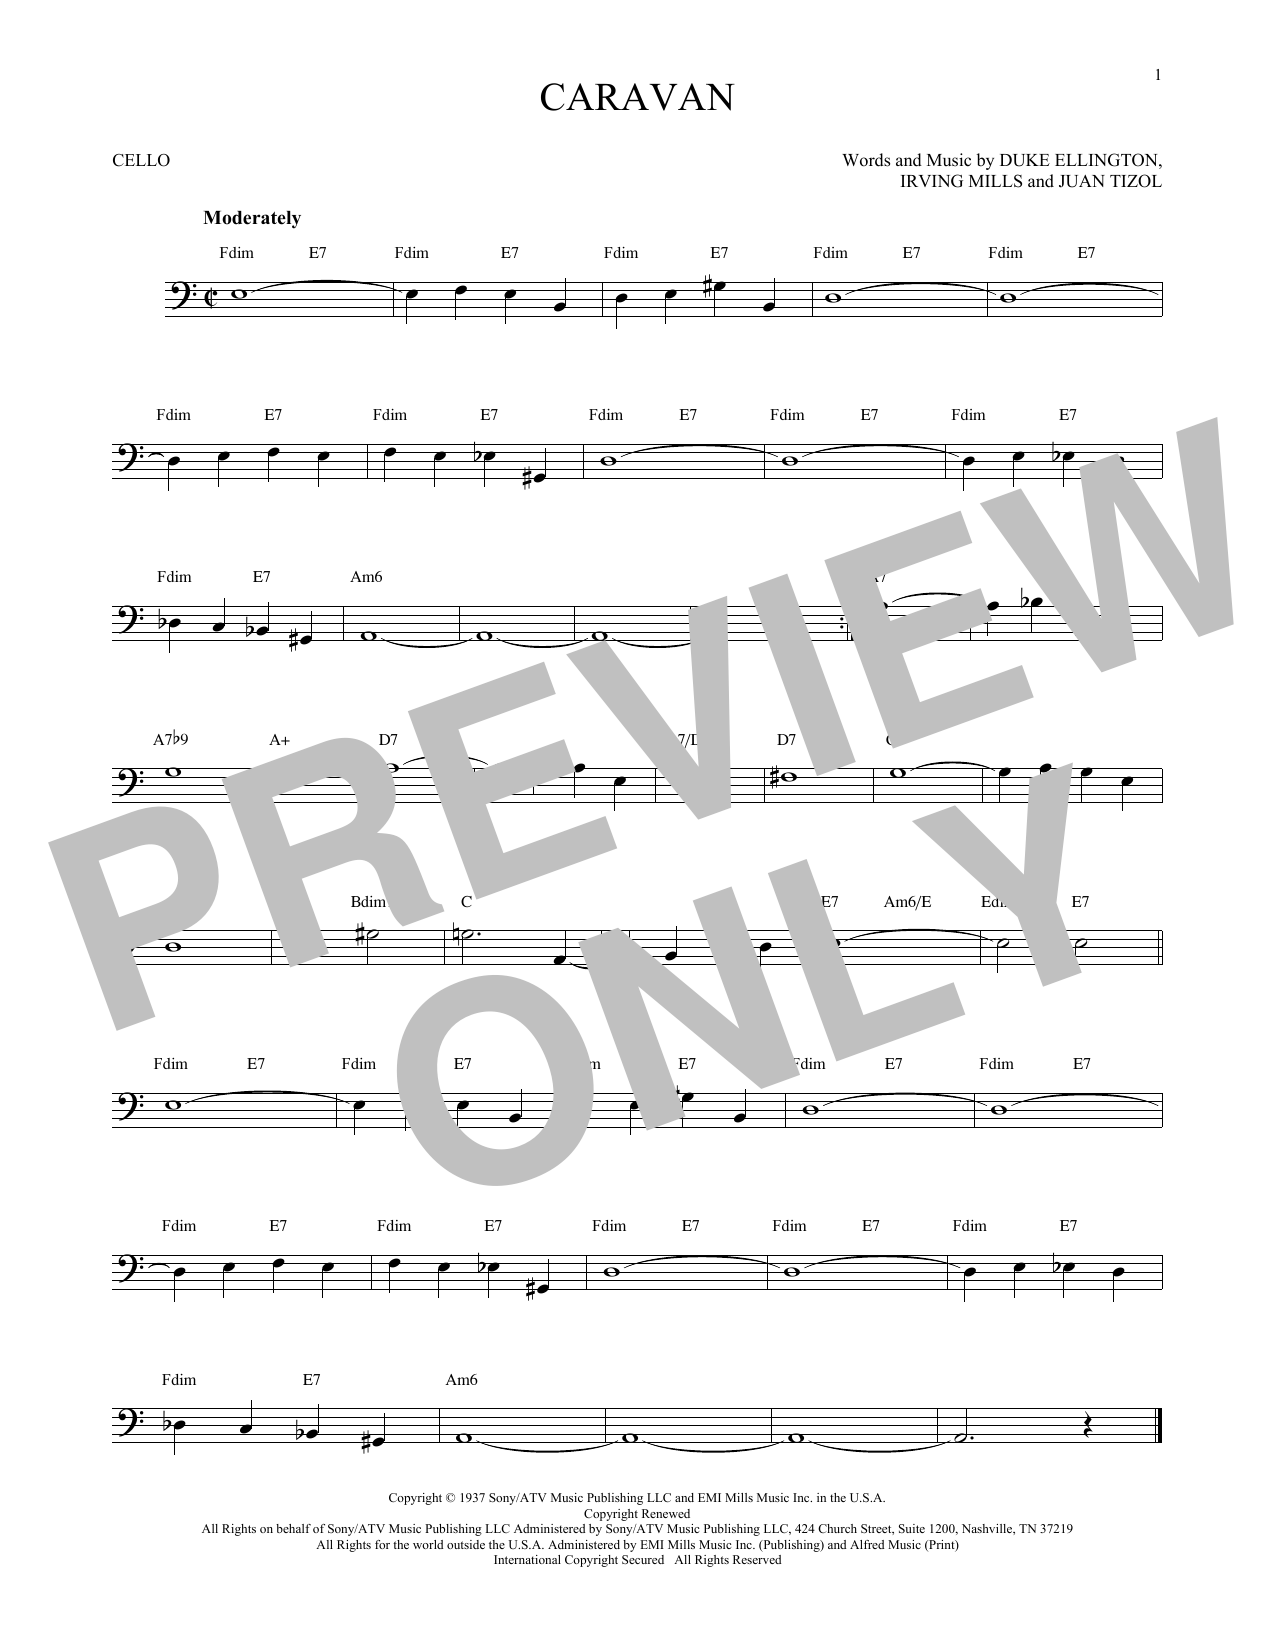 Juan Tizol & Duke Ellington Caravan Sheet Music Notes & Chords for Trombone - Download or Print PDF